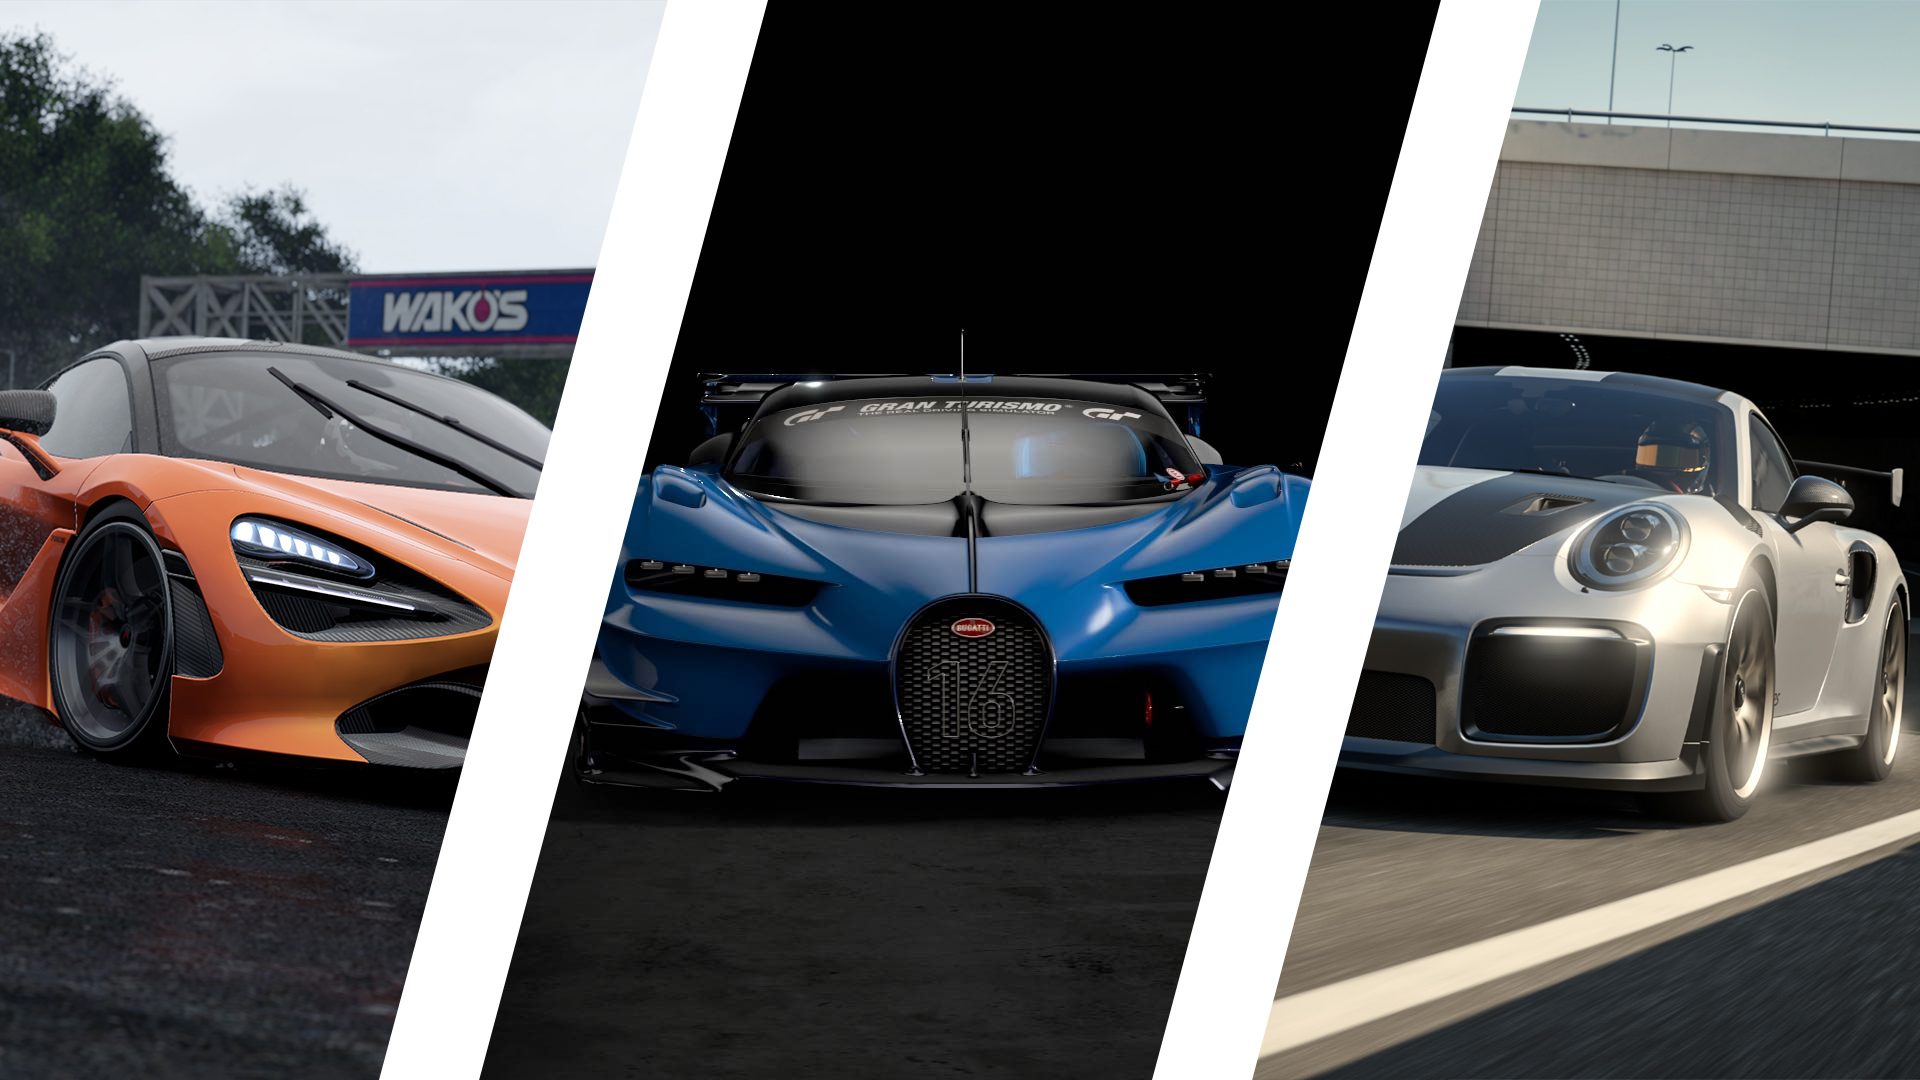 Gran Turismo Sport Update Adds F1 Car, Microtransactions - IGN